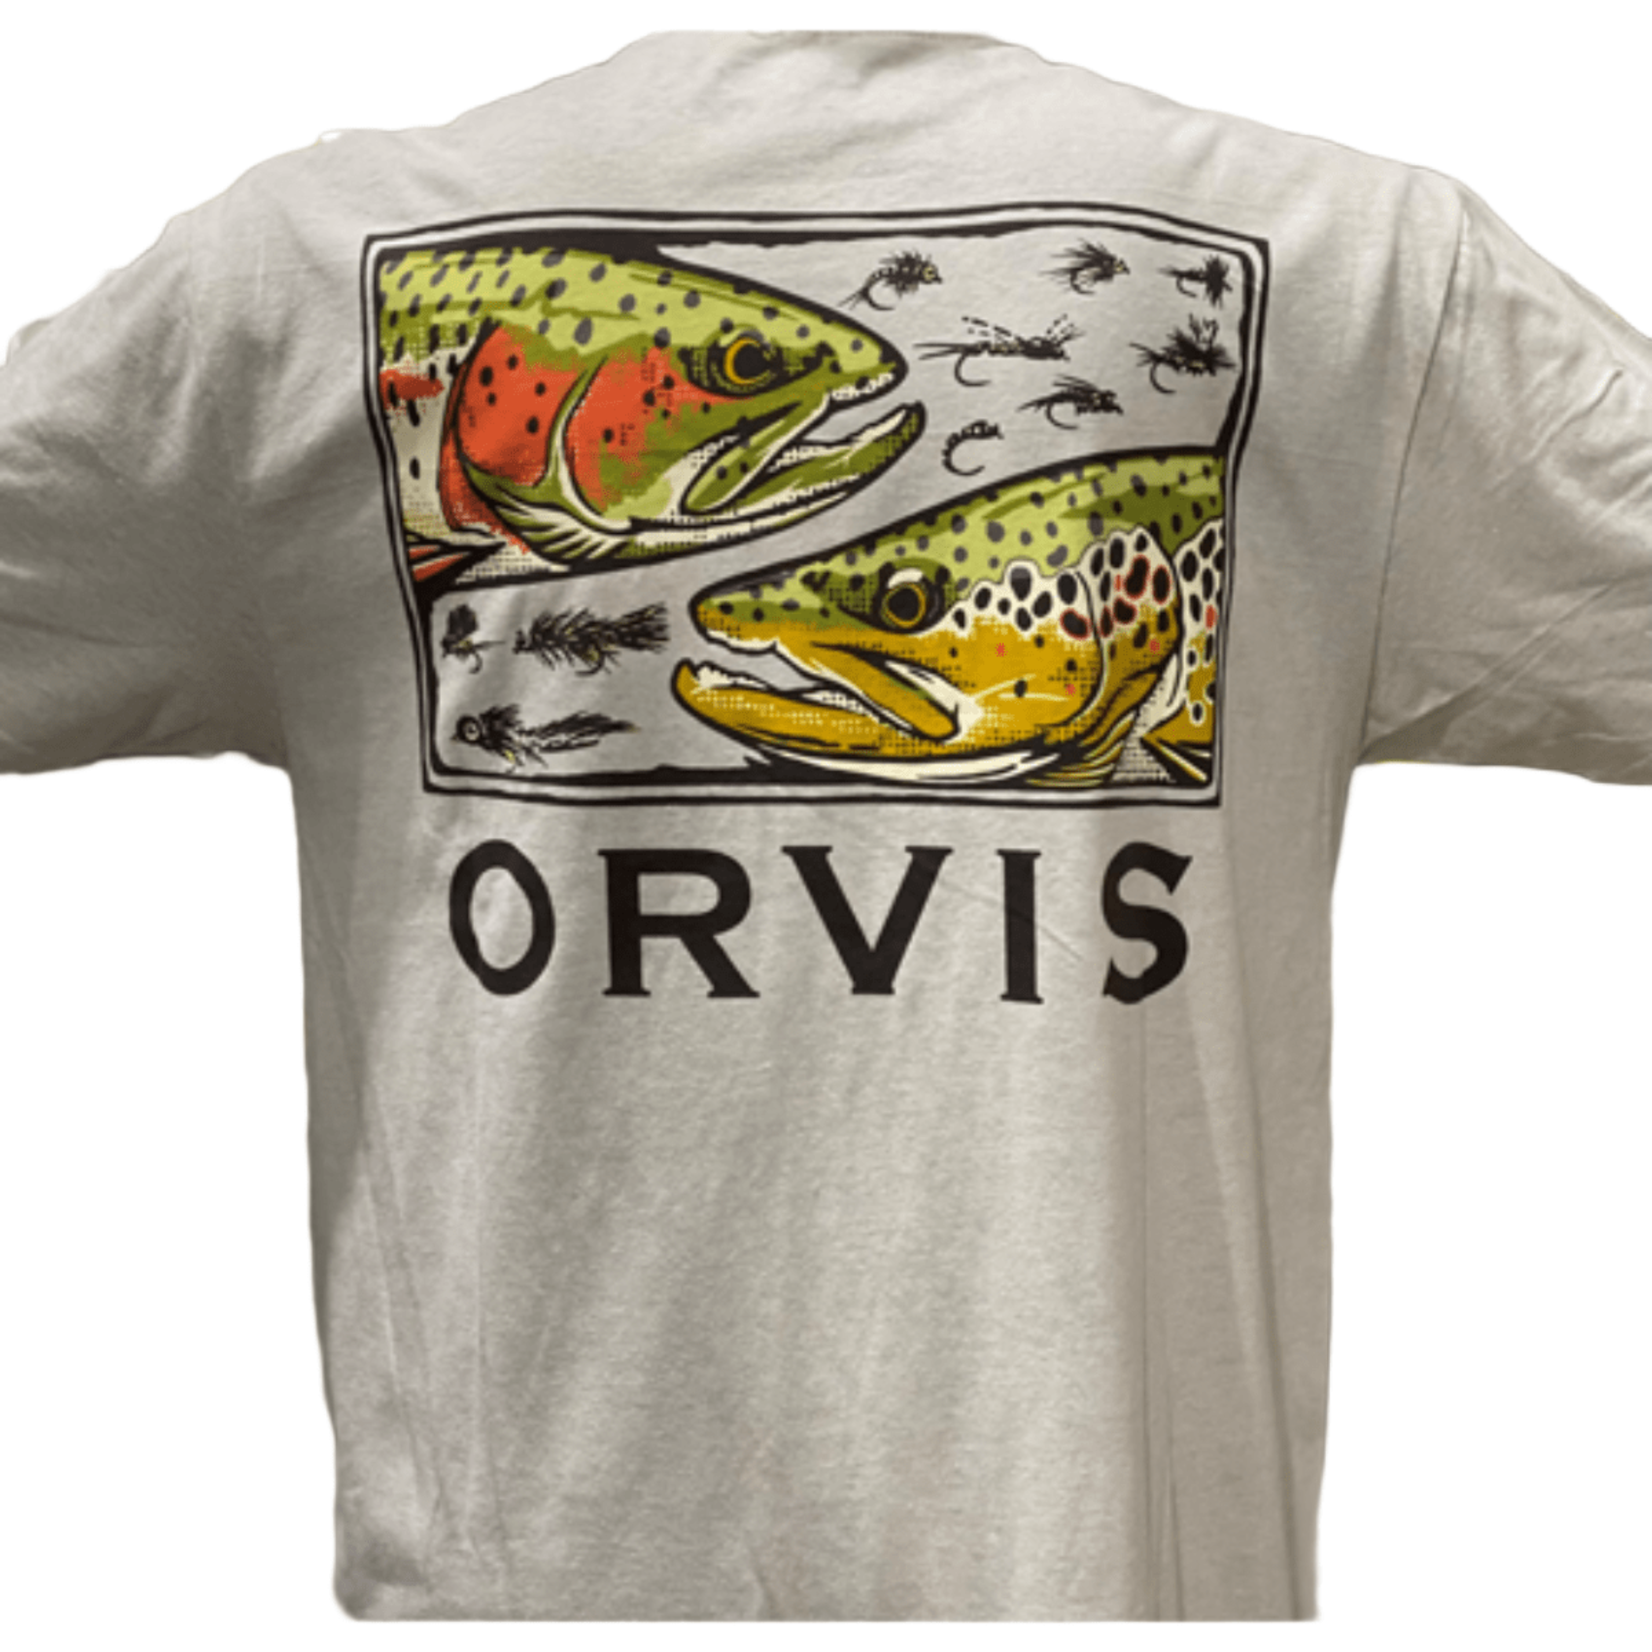 Orvis Orvis Trout Essentials T-shirt - Men's - Black Dog Outdoor